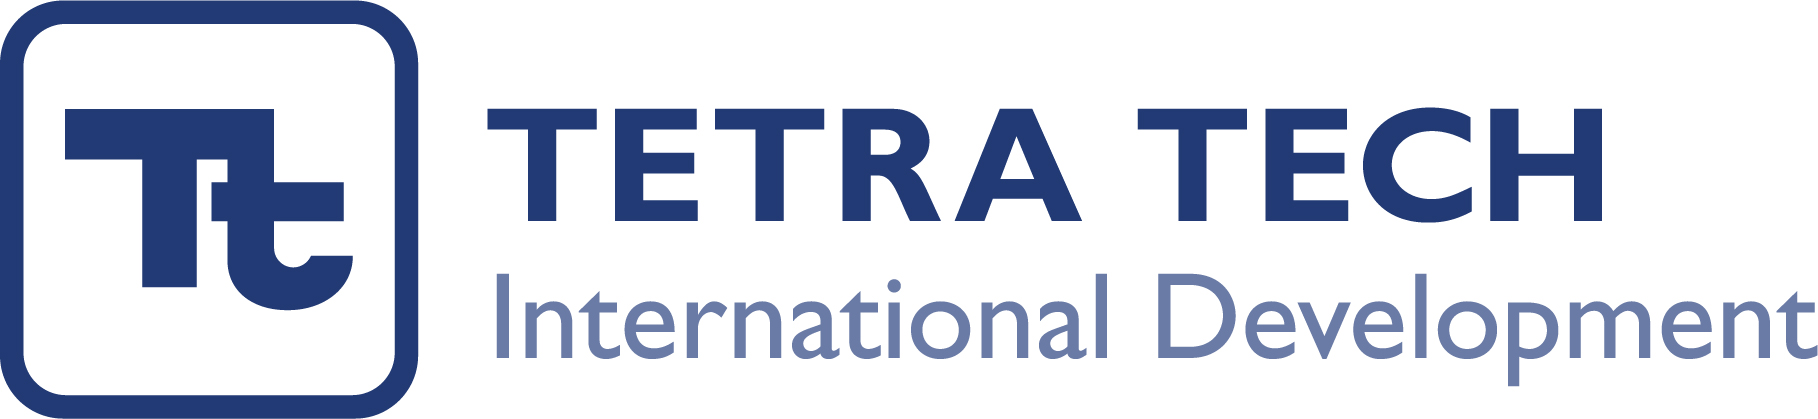 Tetra Tech International Development Logo, Blue Text on white background